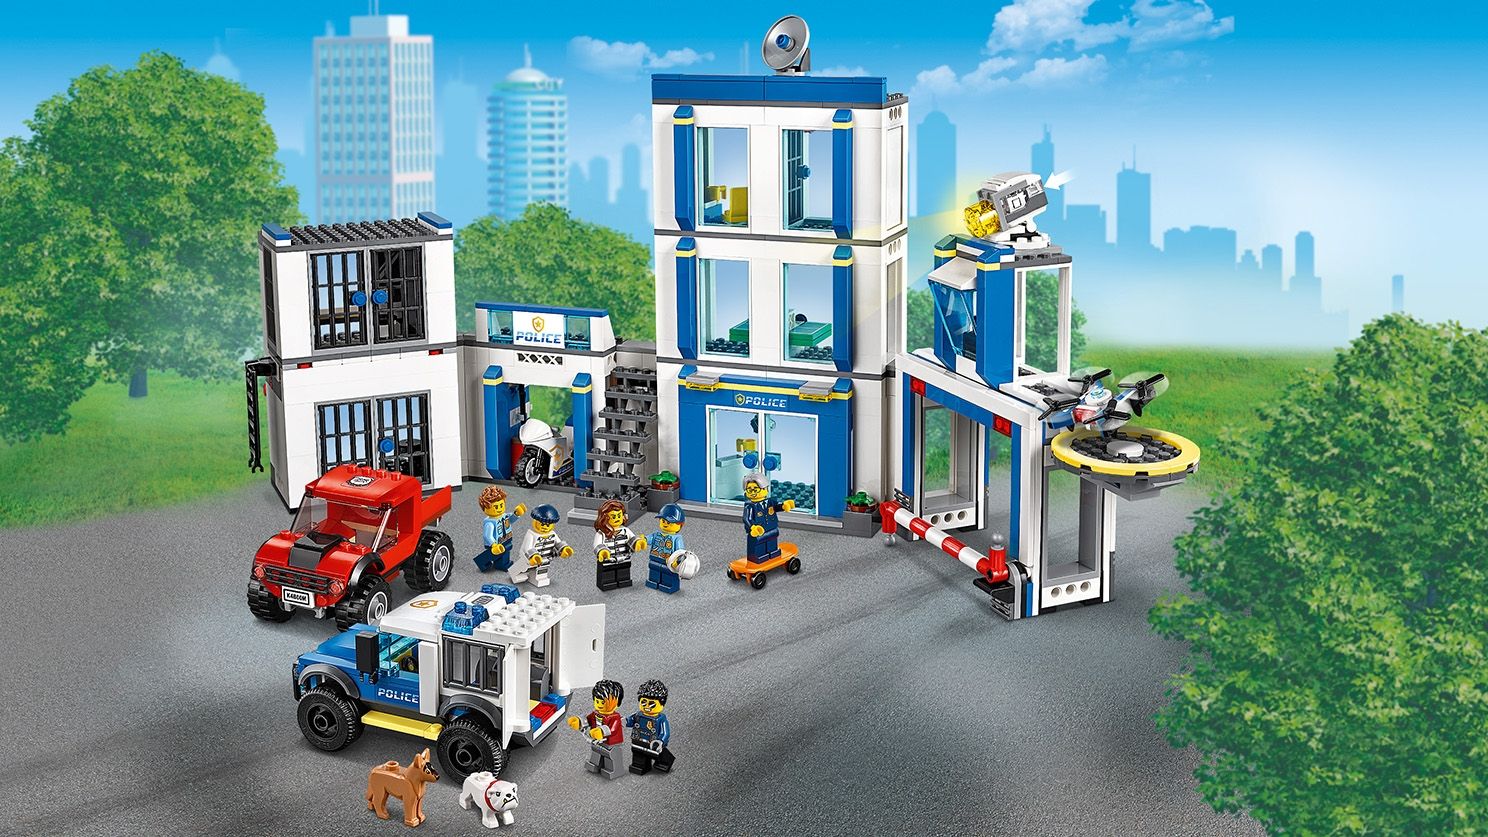 LEGO City 60246 Polizeistation LEGO_60246_WEB_SEC01_1488.jpg